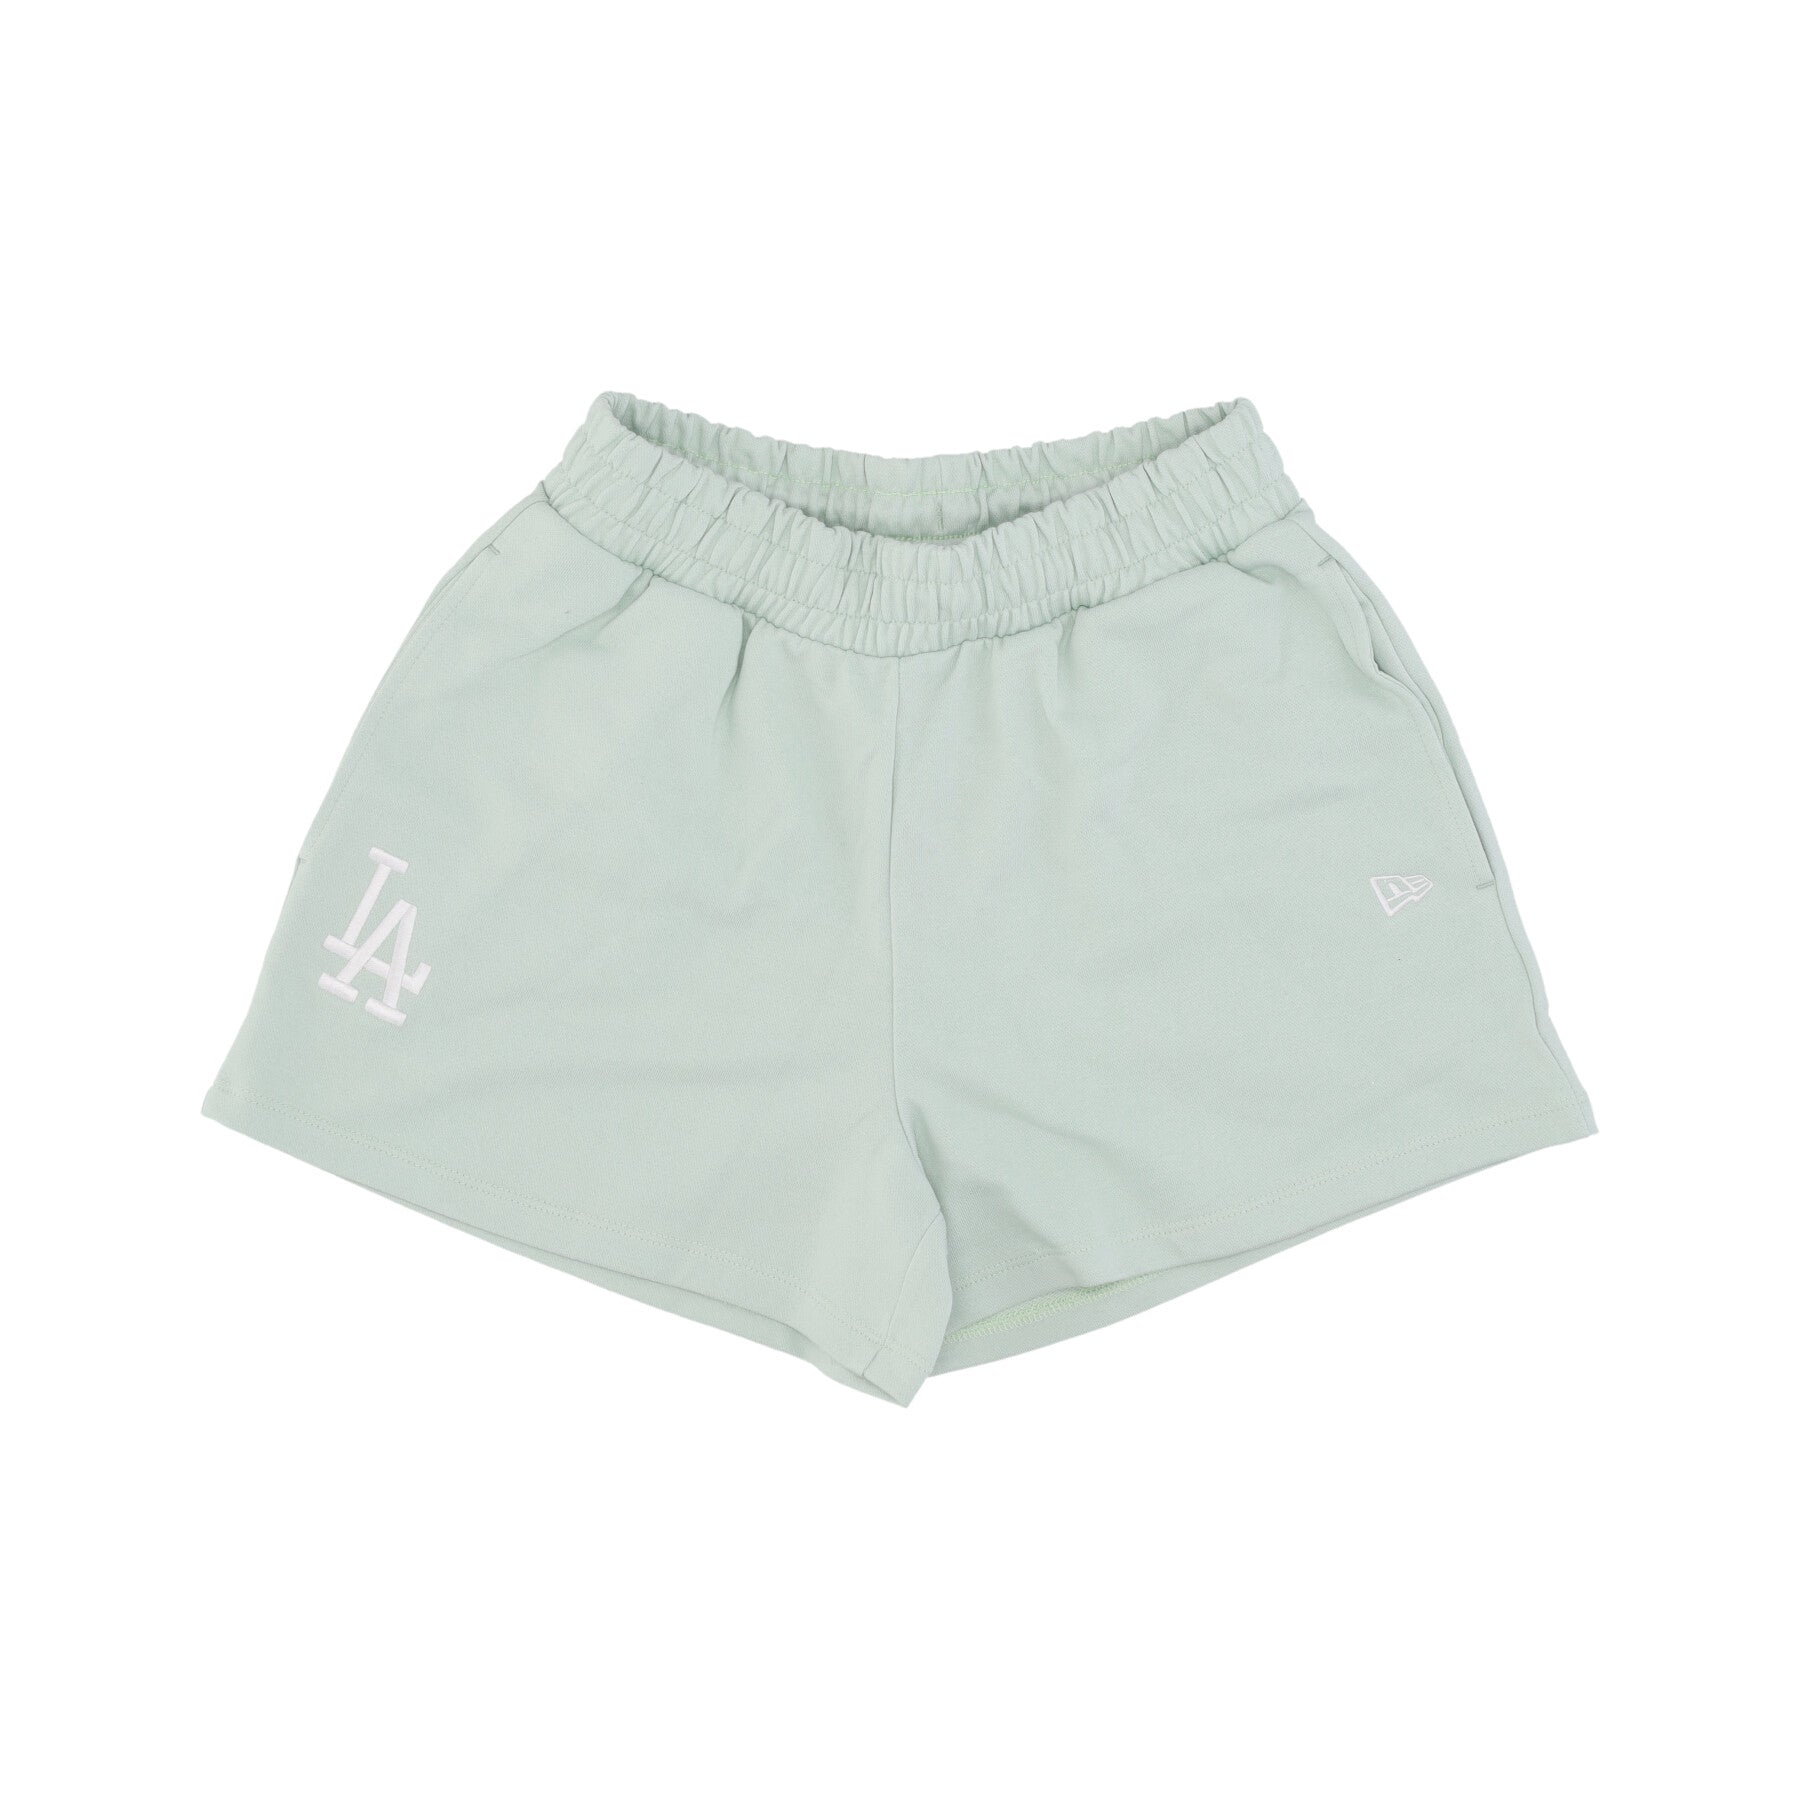 Pantalone Corto Donna Mlb Lifestyle Shorts Losdod Mint/white 60435324